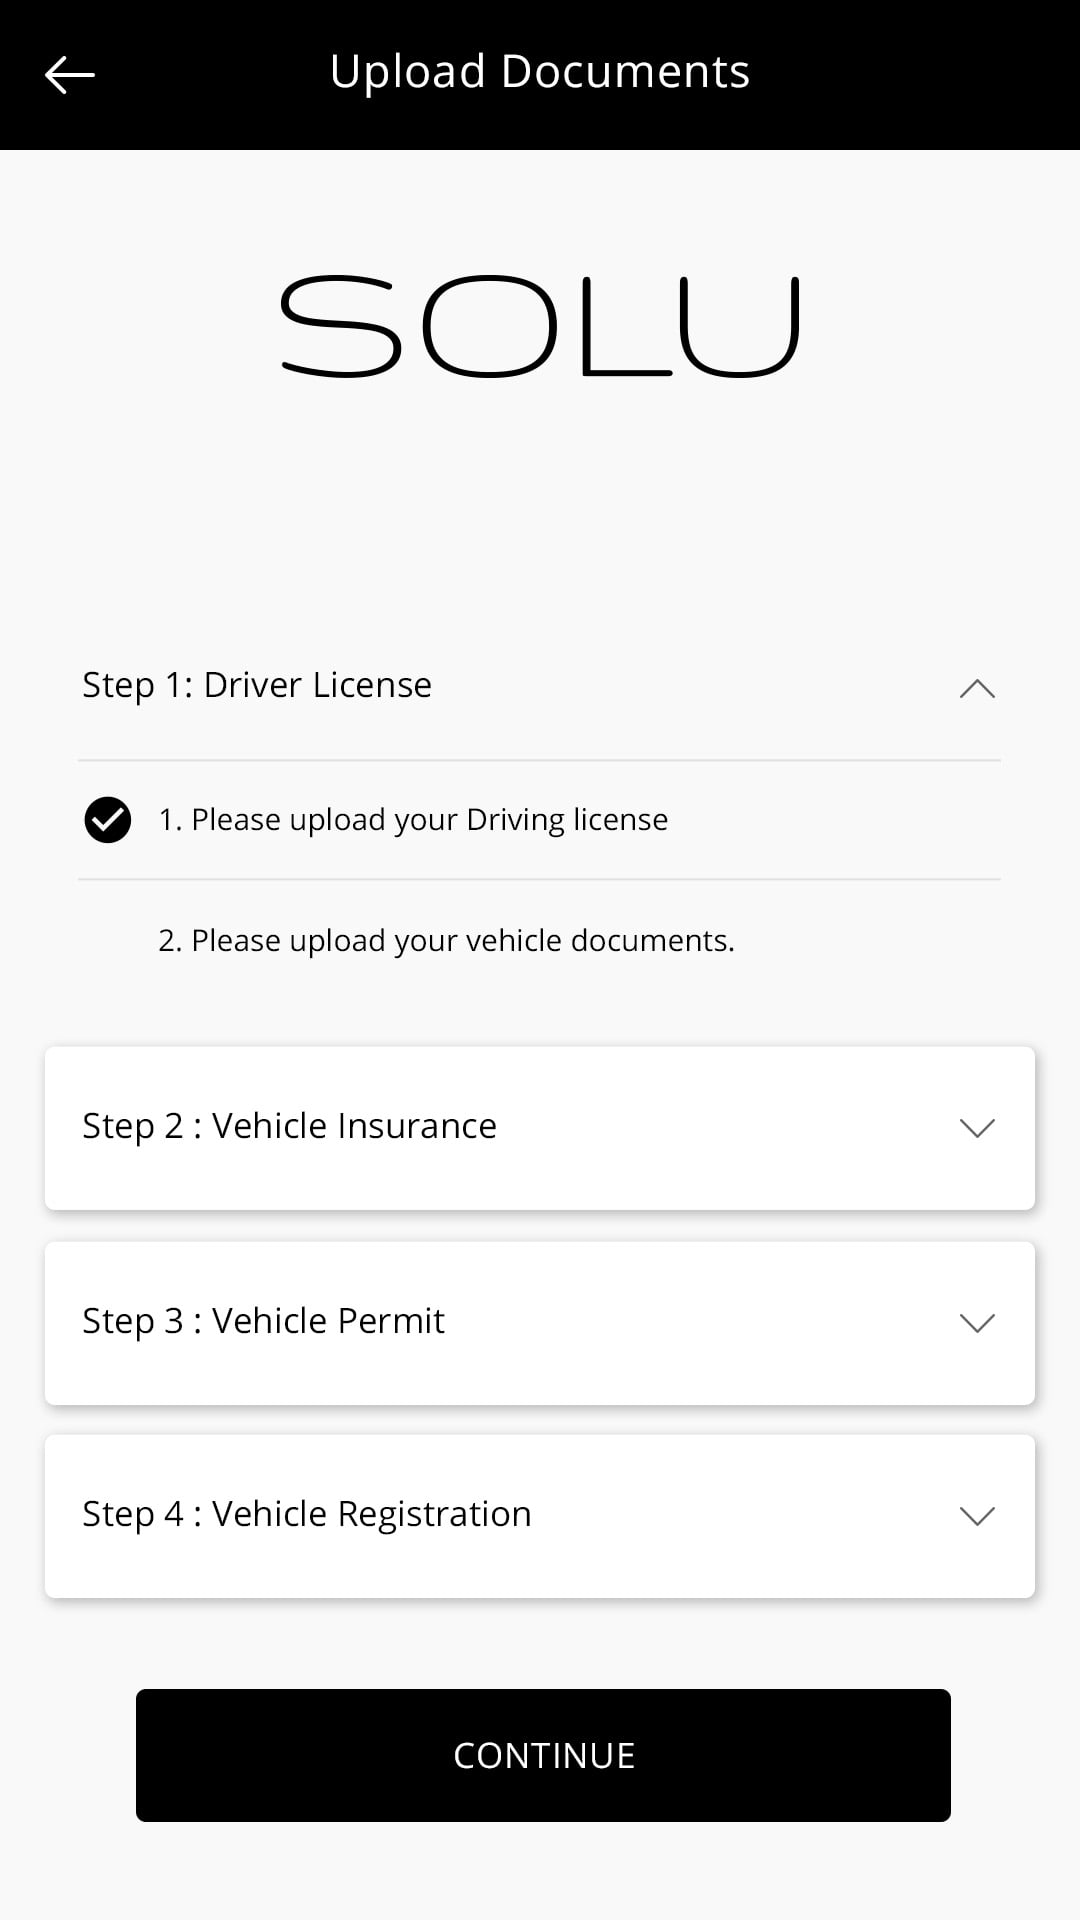 Solu (ride sharing app) Upload Document screen